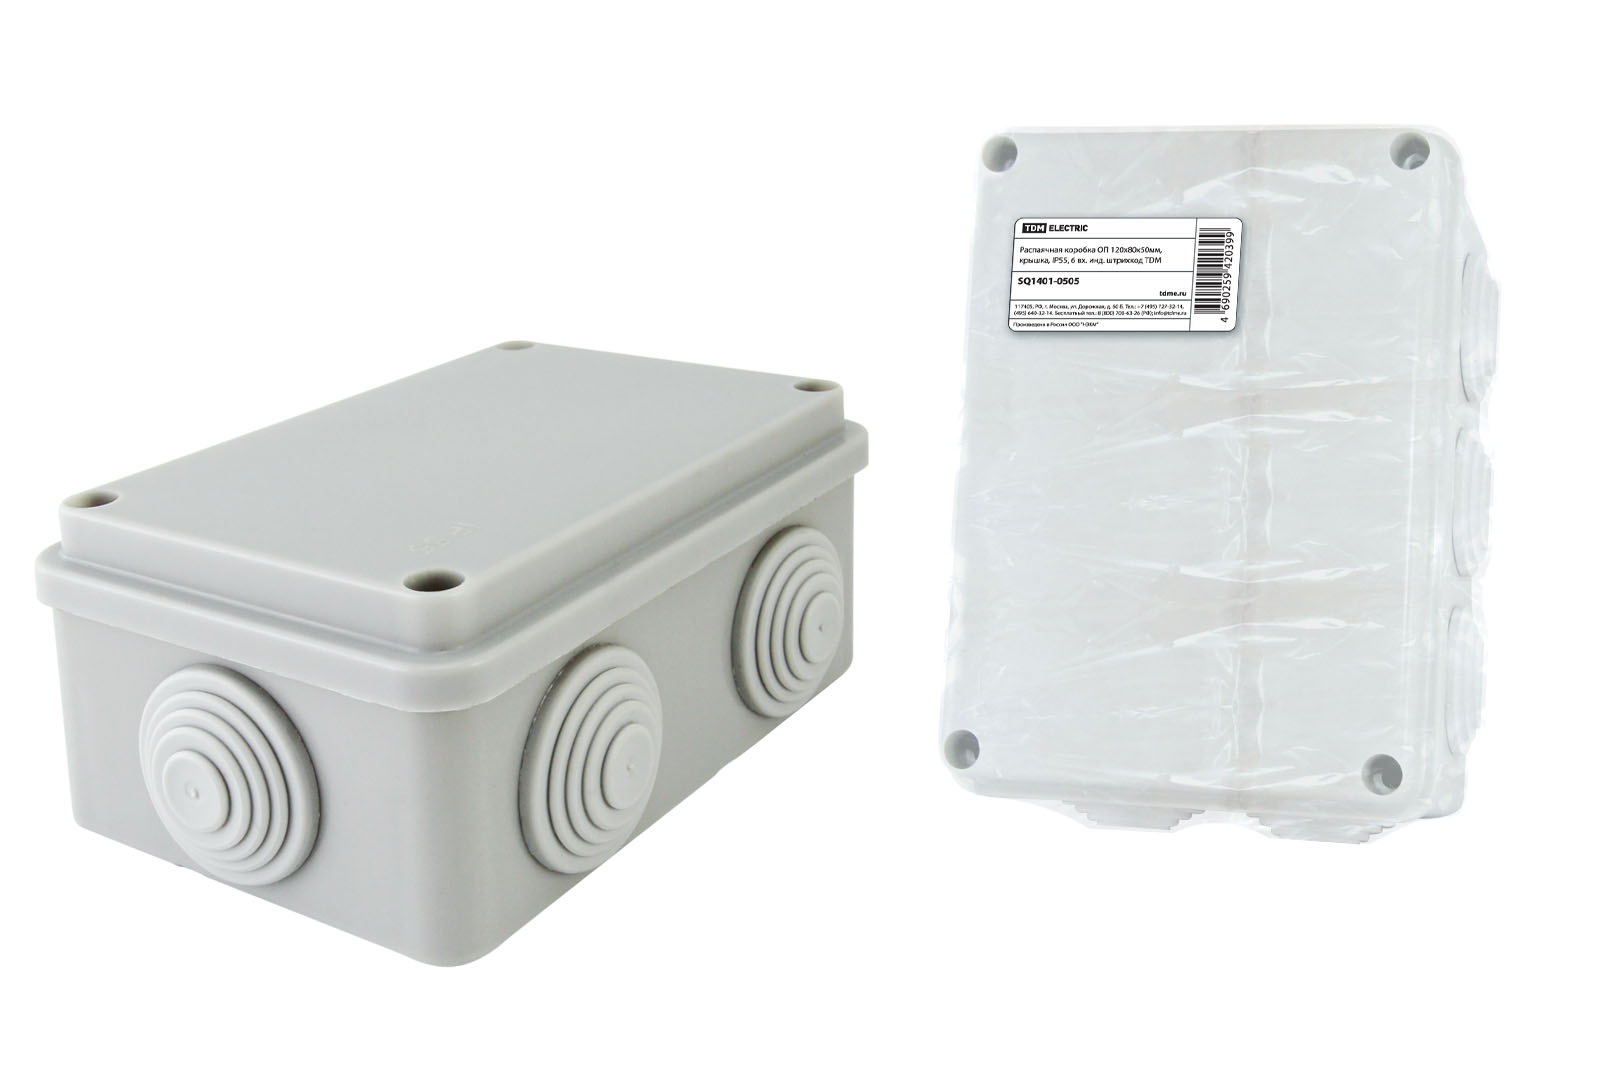 Распаячная коробка ОП 120х80х50мм, крышка, IP55, 6 вх. инд. штрихкод TDM SQ1401-0505 распаячная коробка retro electro черная пластик